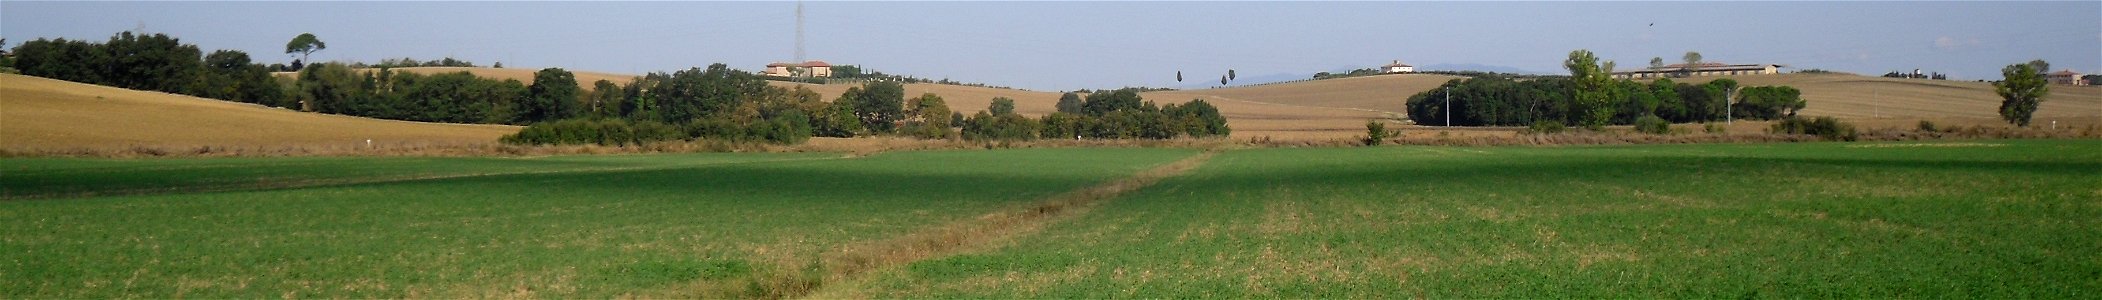 Alfalfa (medicago sativa) field near Brolio in Val di Chiana, Tuscany, Italy. photo